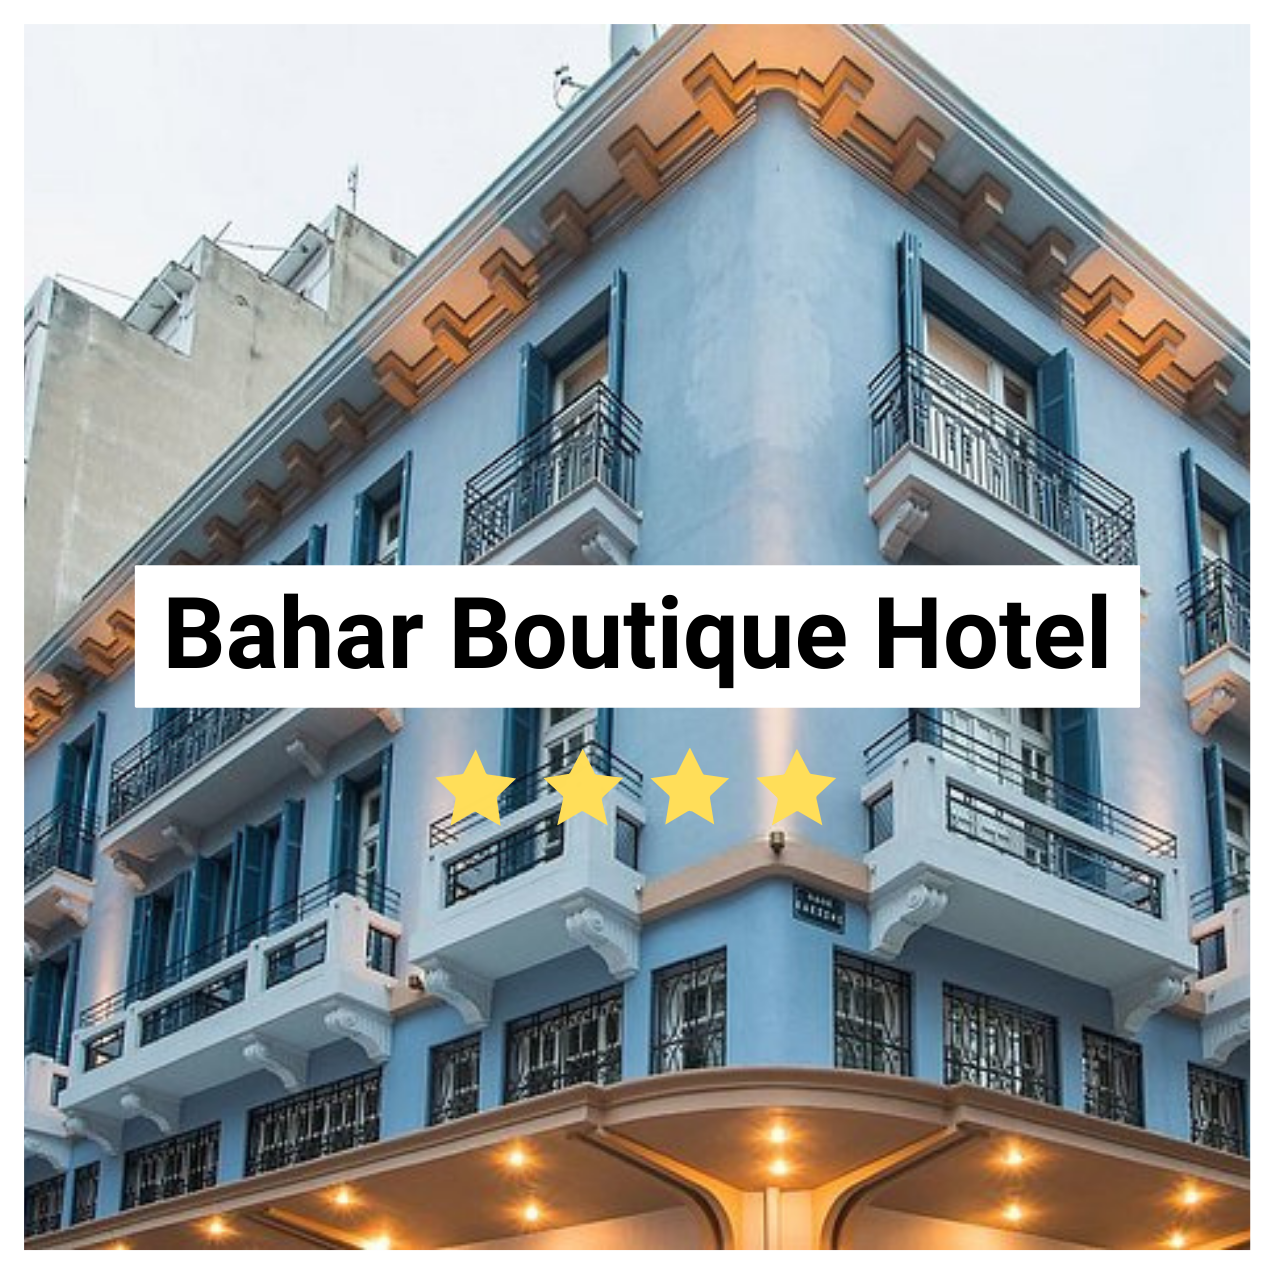 The Bahar Boutique Hotel Image.